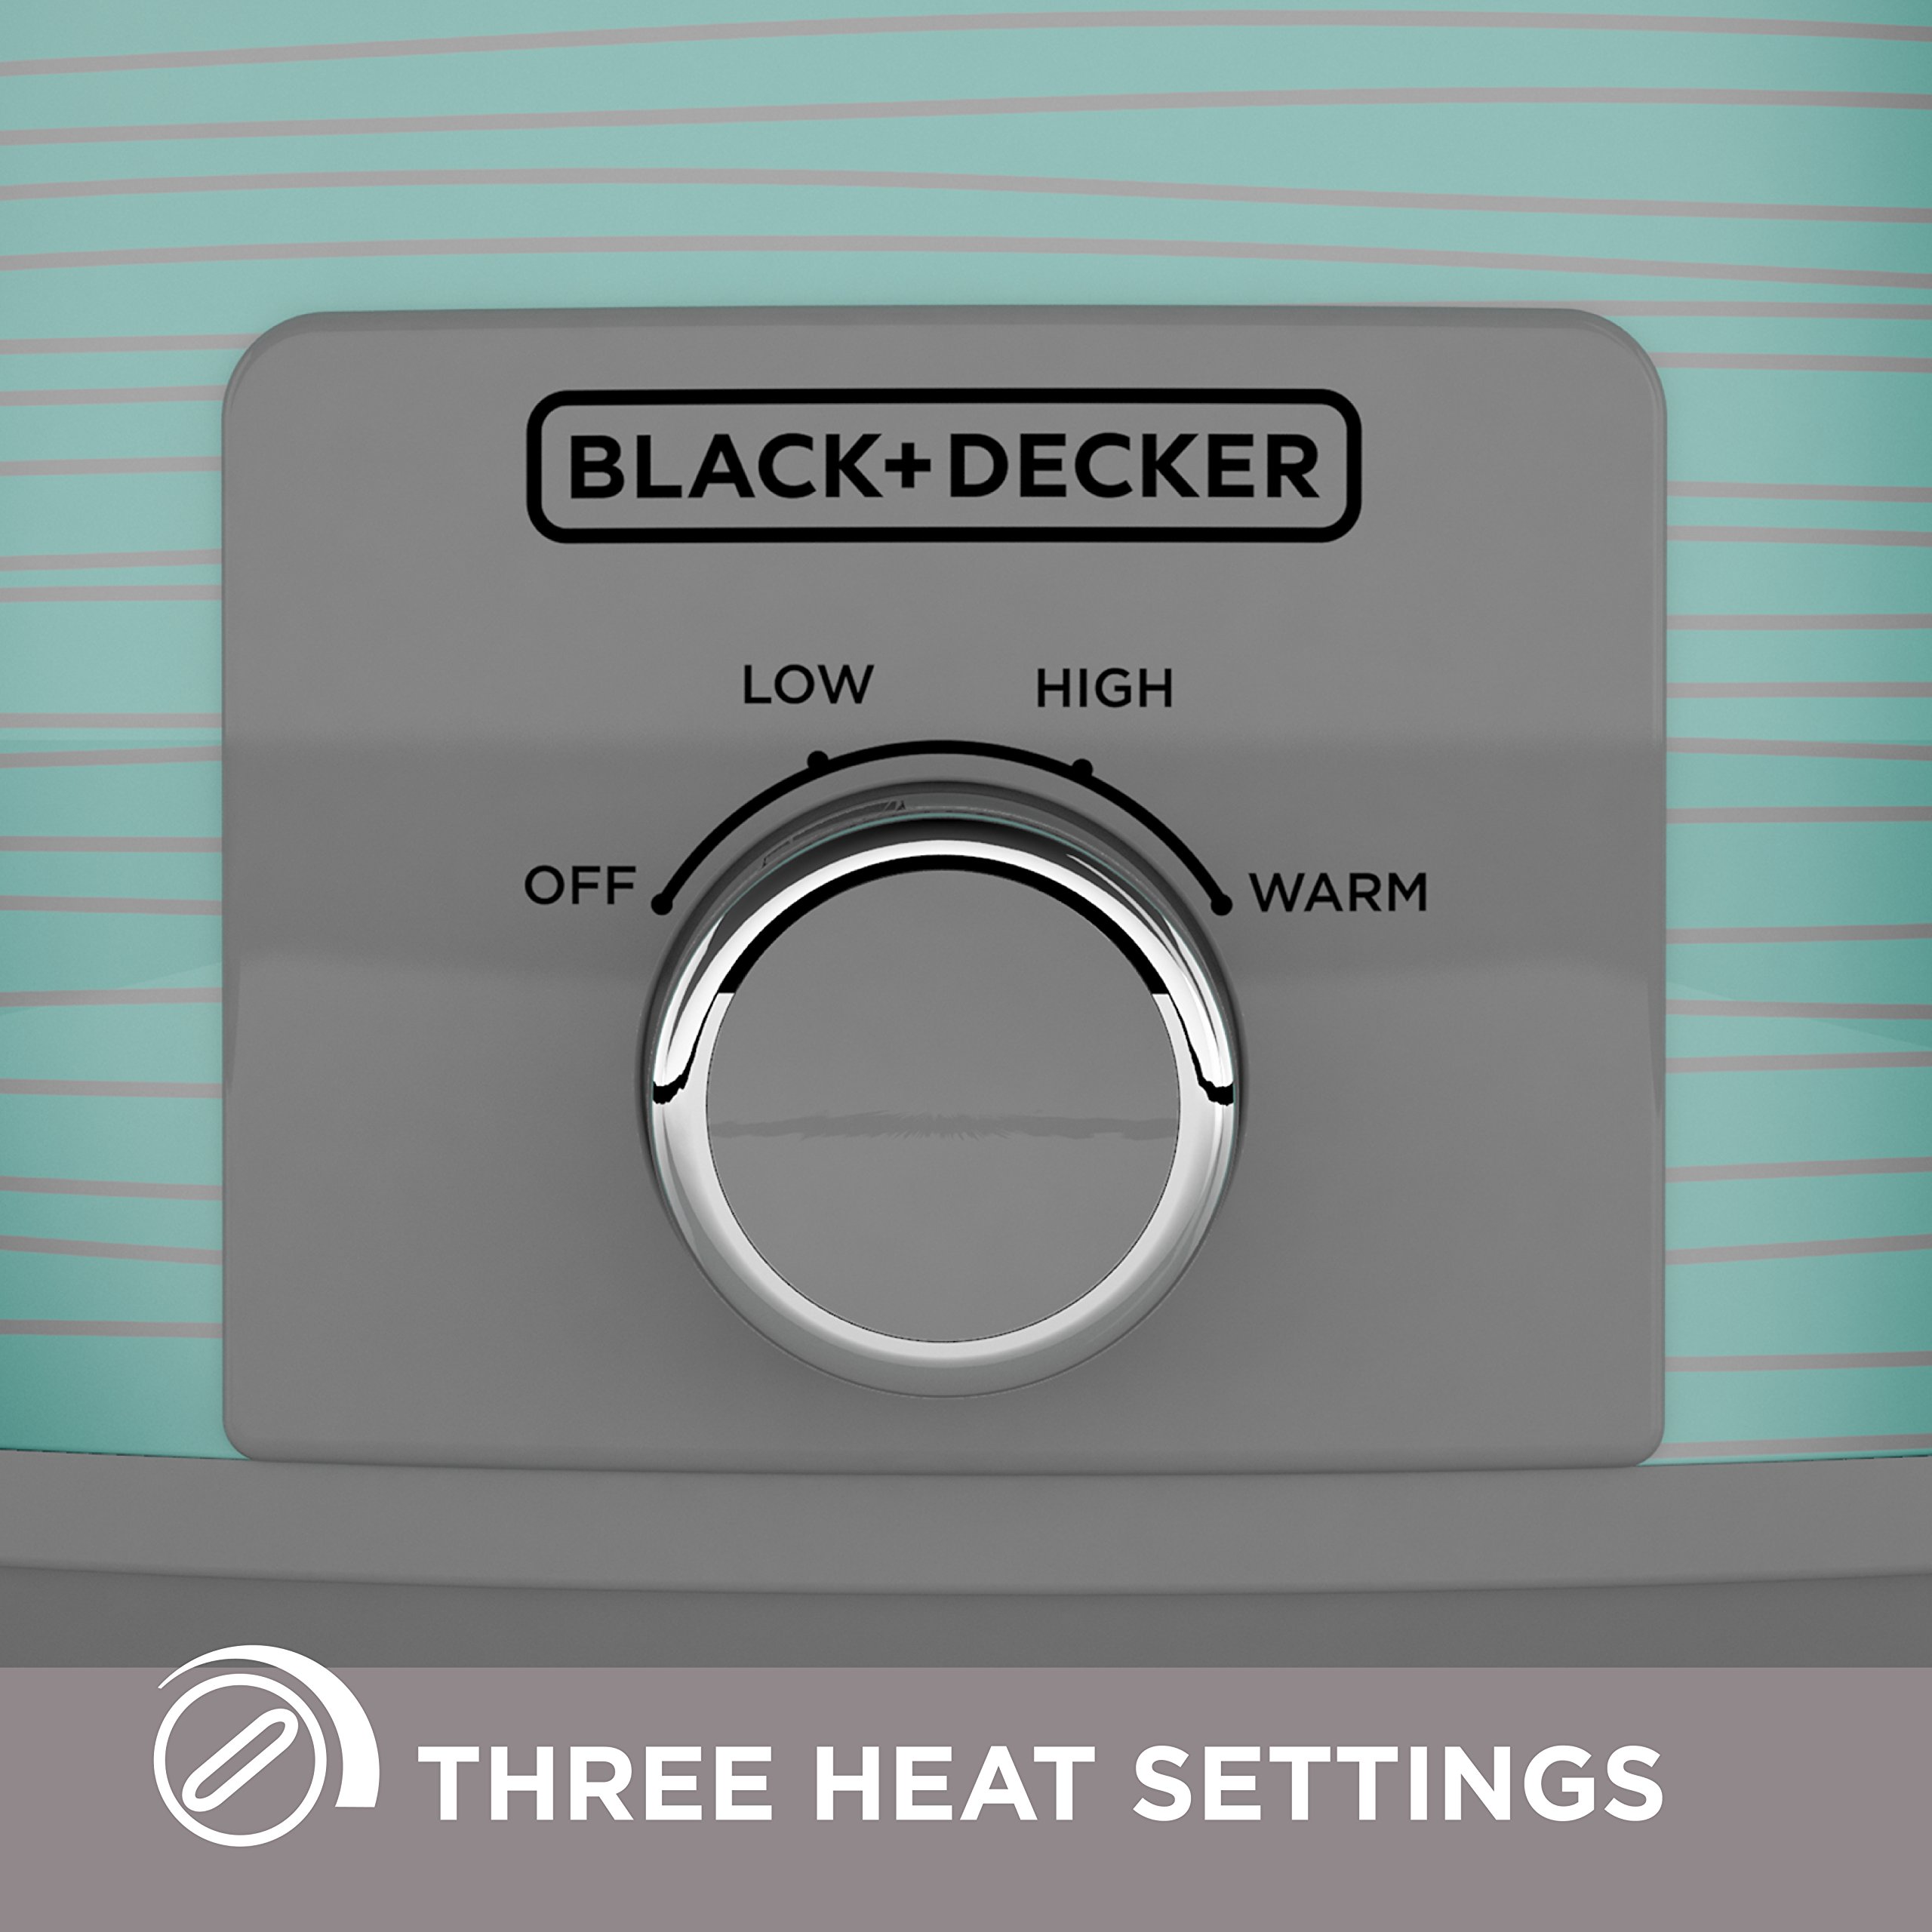 BLACK+DECKER 7 Quart Dial Control Slow Cooker with Built in Lid Holder, Teal Pattern